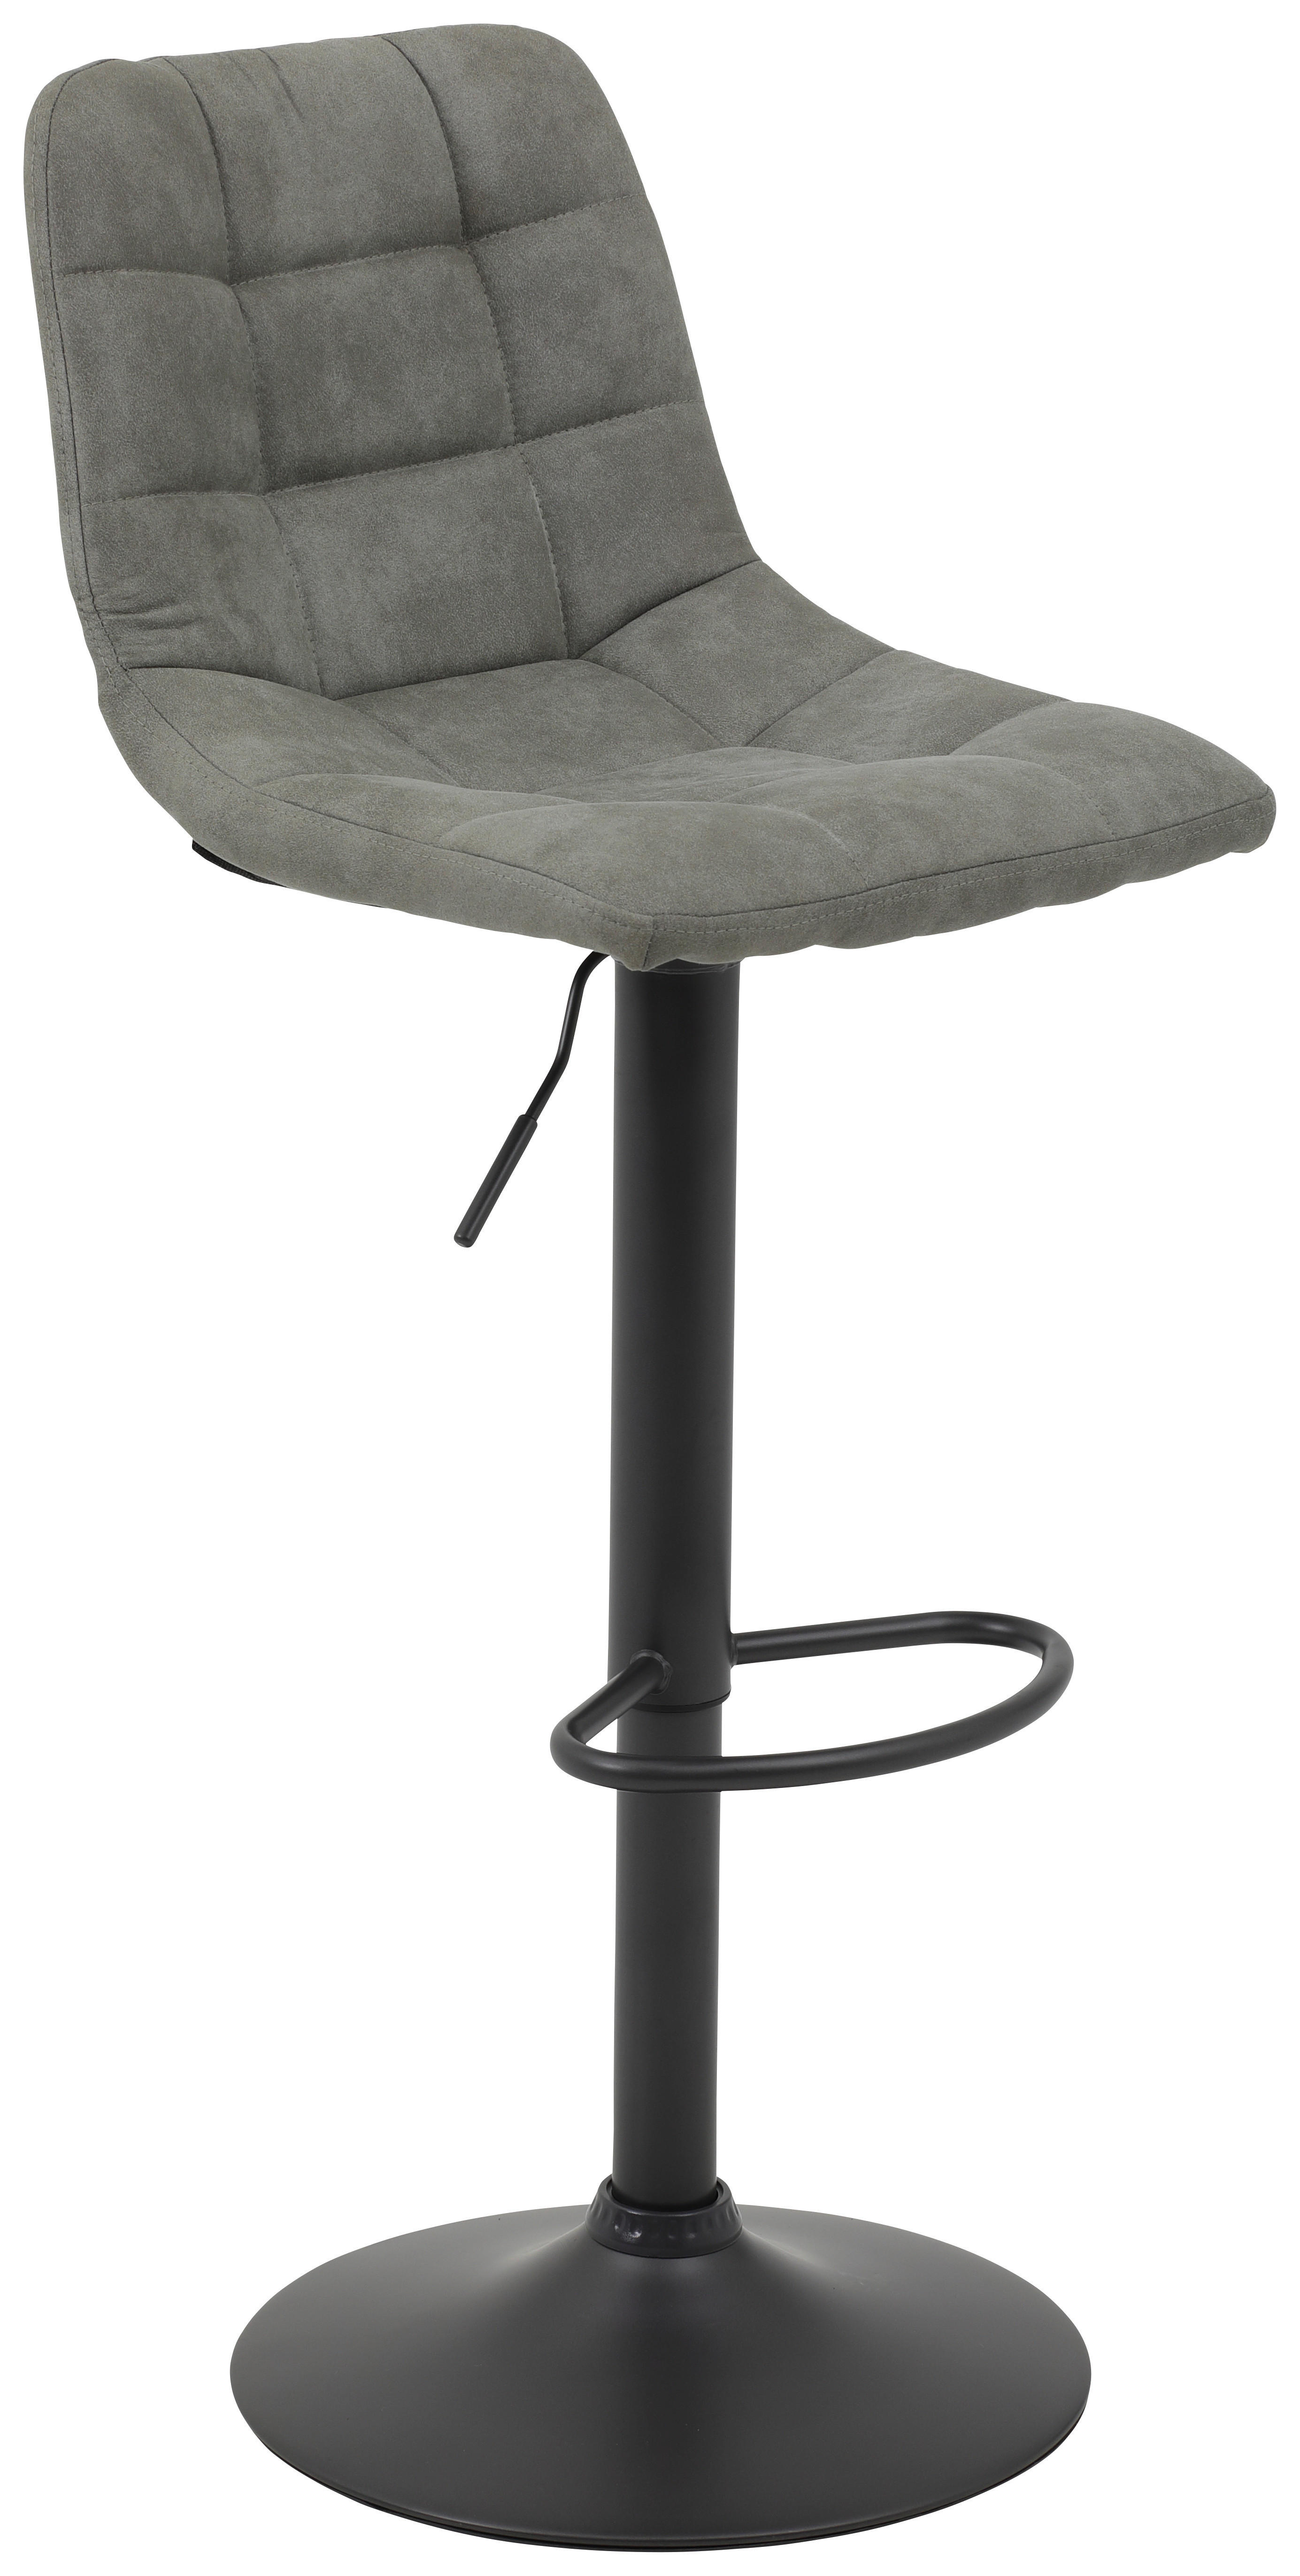 BARHOCKER Mikrofaser Grau Sitzfläche 360° drehbar  - Grau, KONVENTIONELL, Textil/Metall (43/113/44cm) - Carryhome